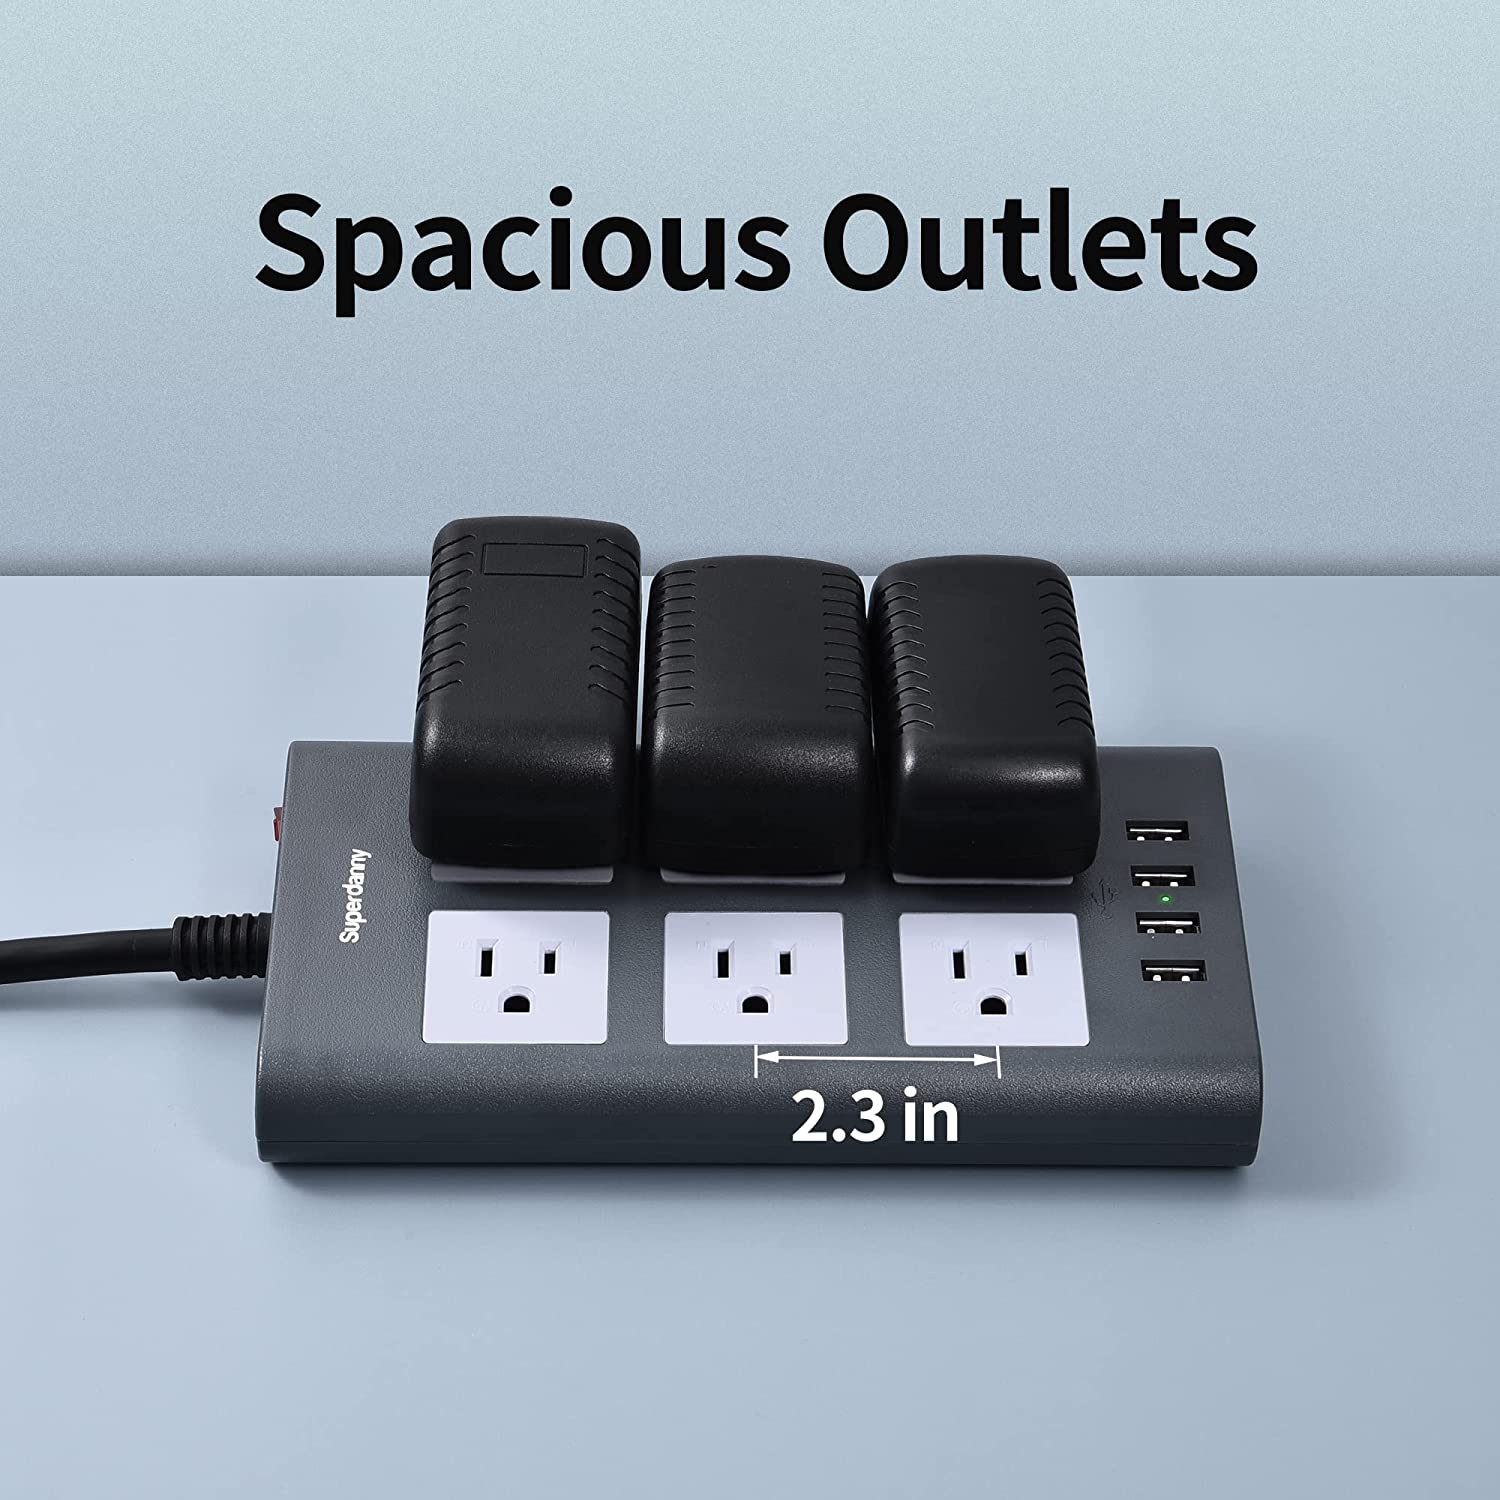 SUPERDANNY 15A Power Strip 6 Outlets 4 USB Ports 10FT Long MDL S P 0065 W6A4U